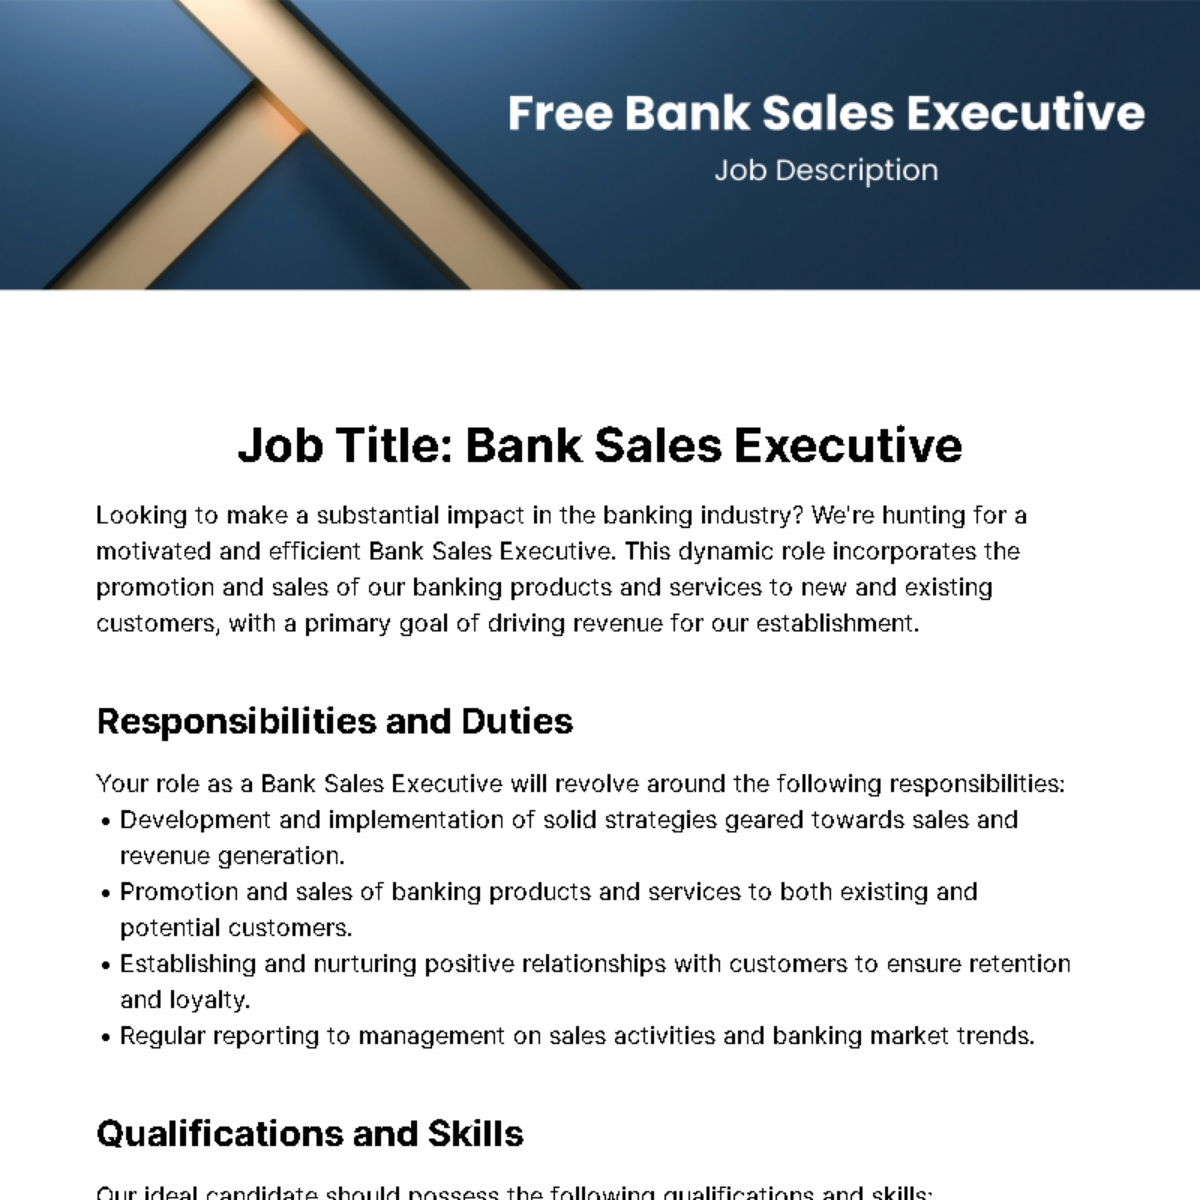 Free Bank Sales Executive Job Description Template